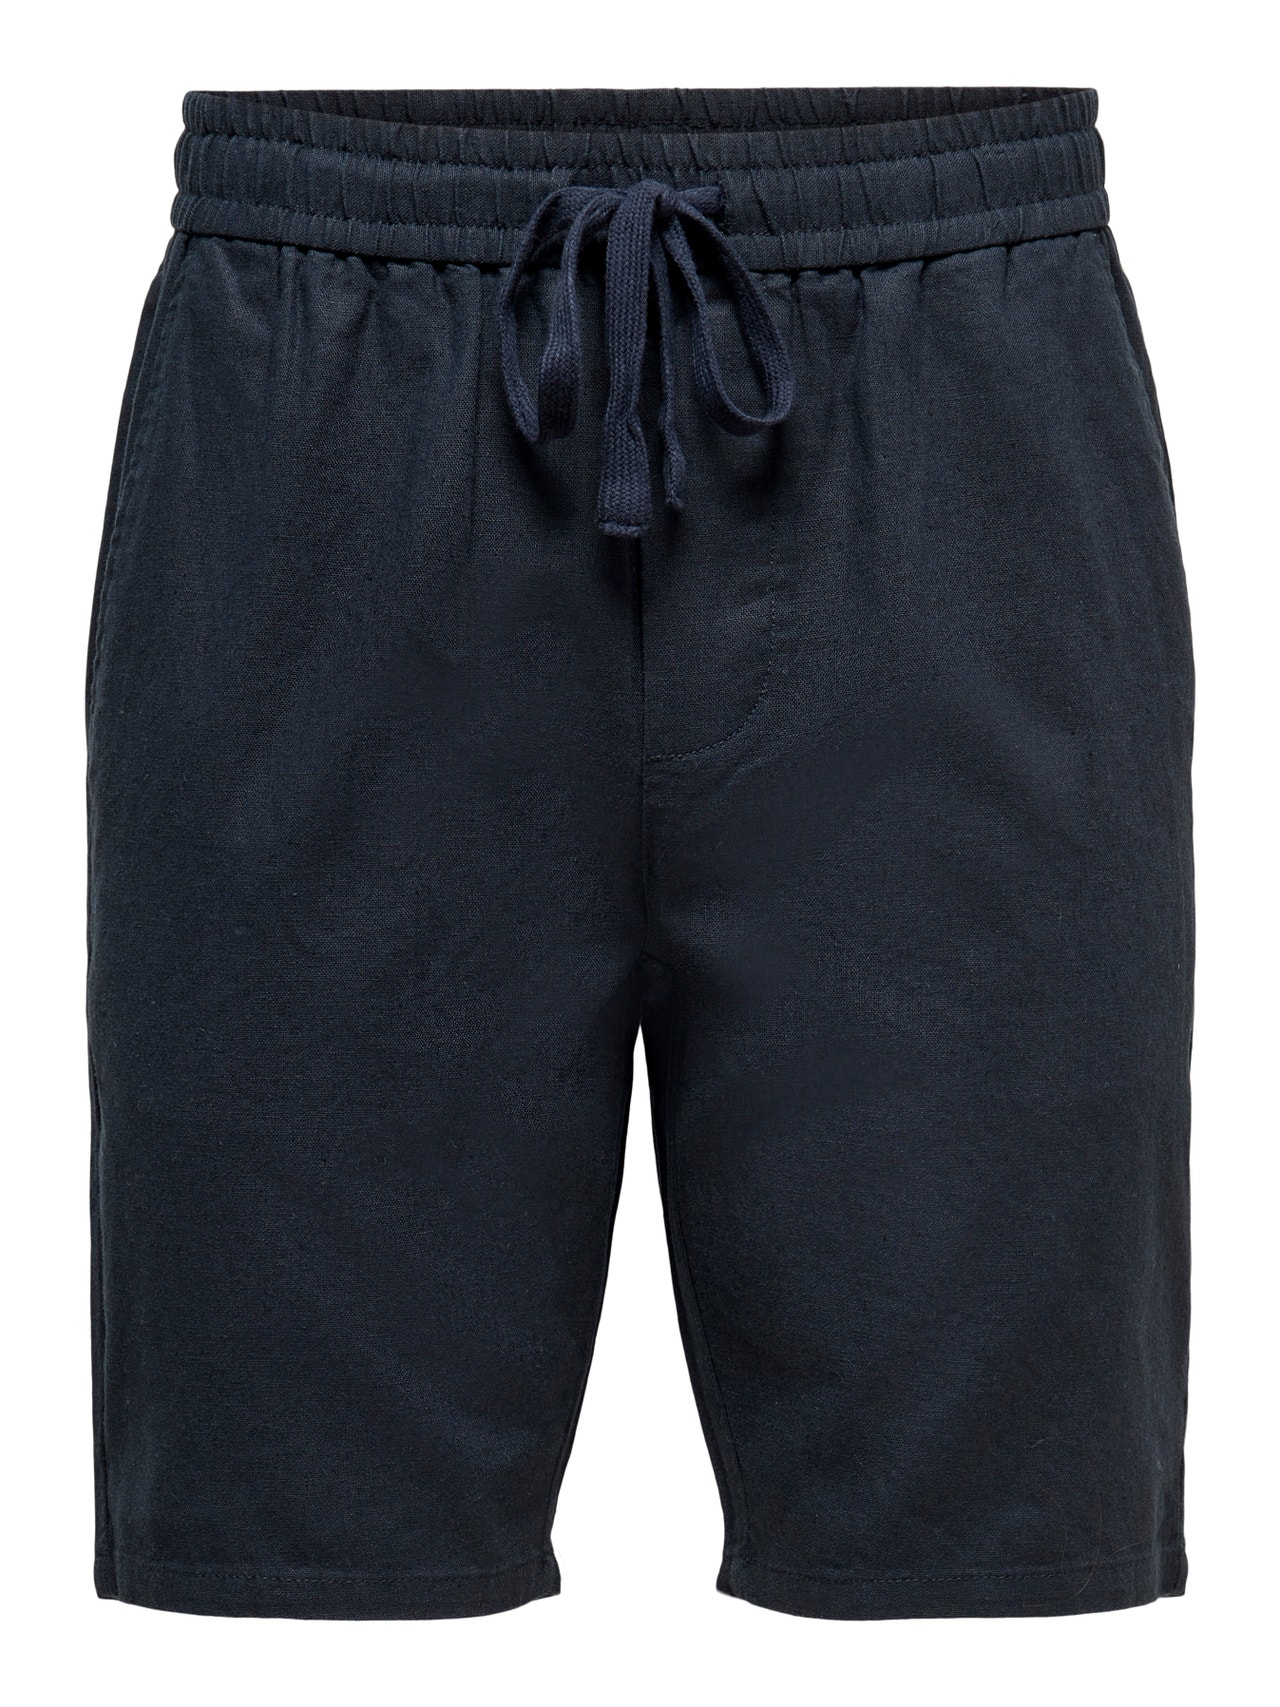 ONLY & SONS Komfort Fit Mittlere Taille Shorts -Dark Navy - 22021824